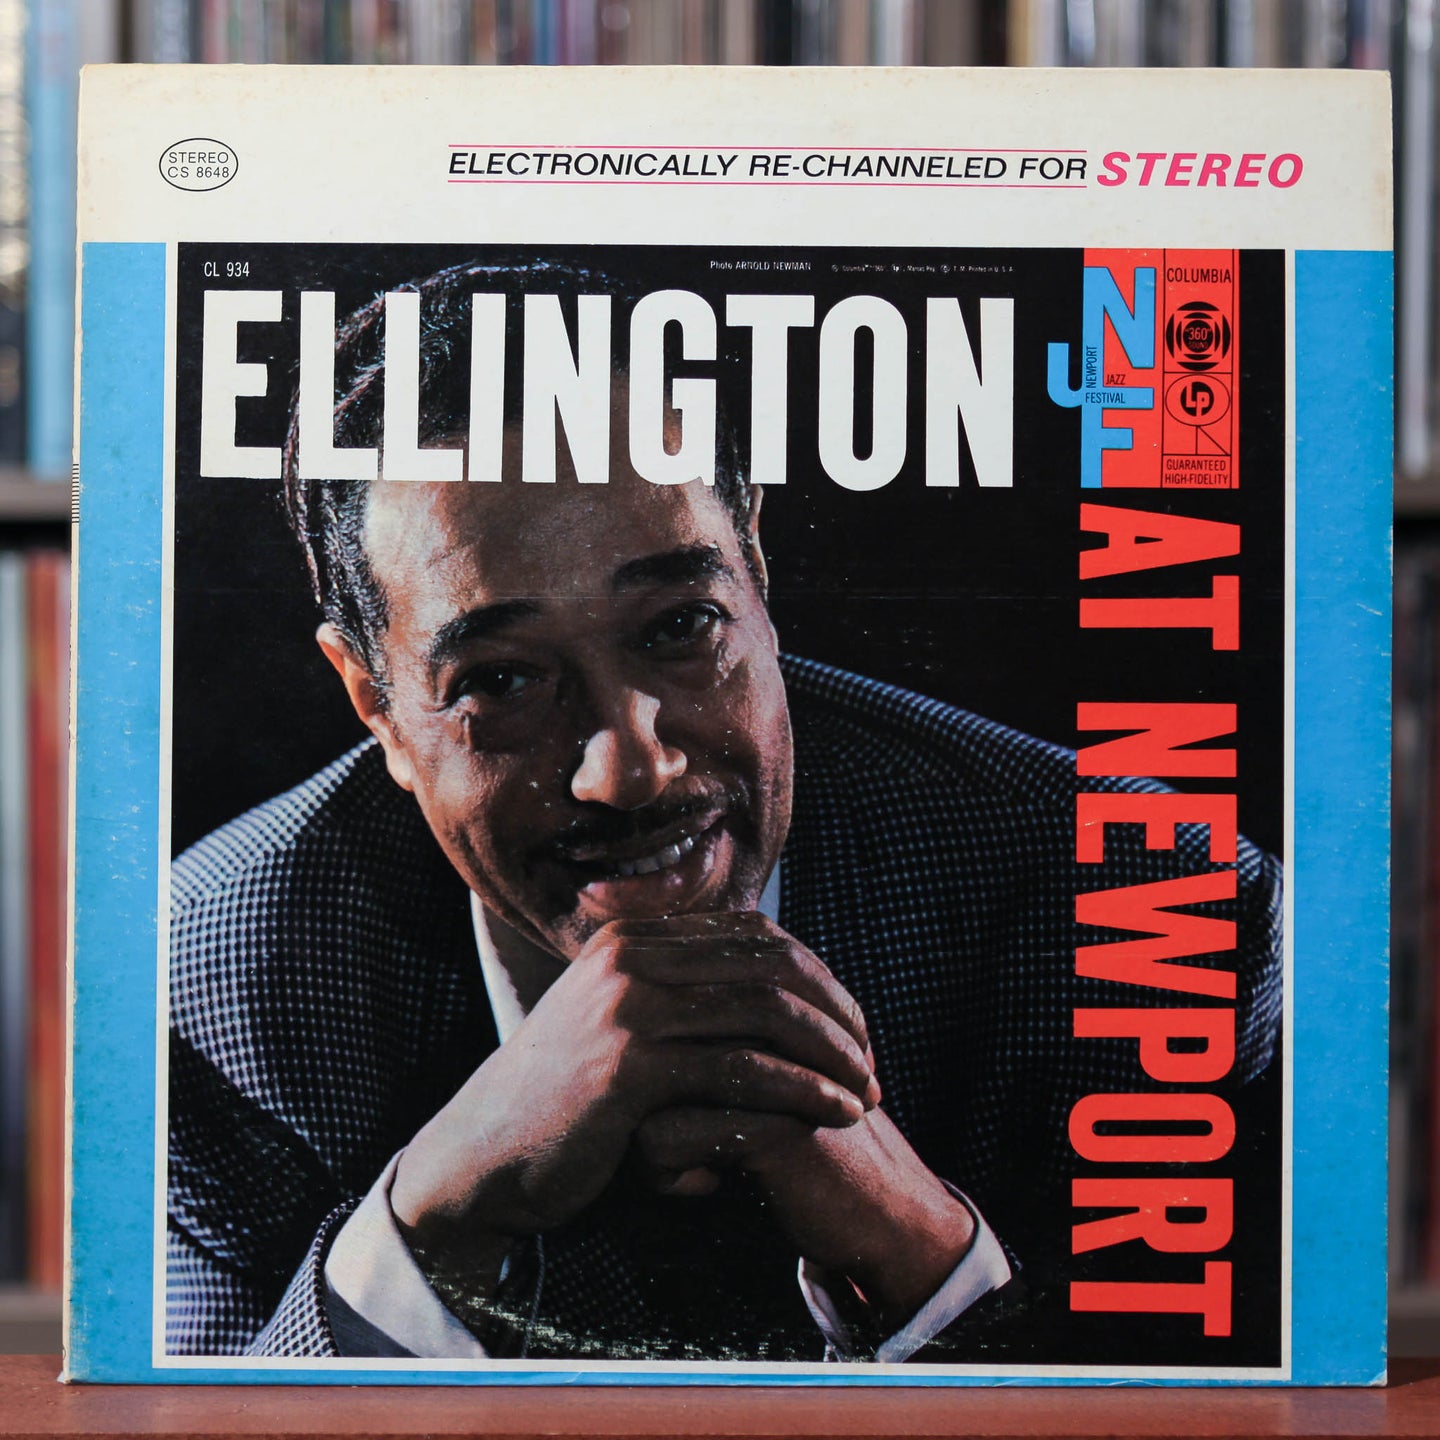 Duke Ellington - Ellington At Newport - 1970s Columbia, VG+/VG+